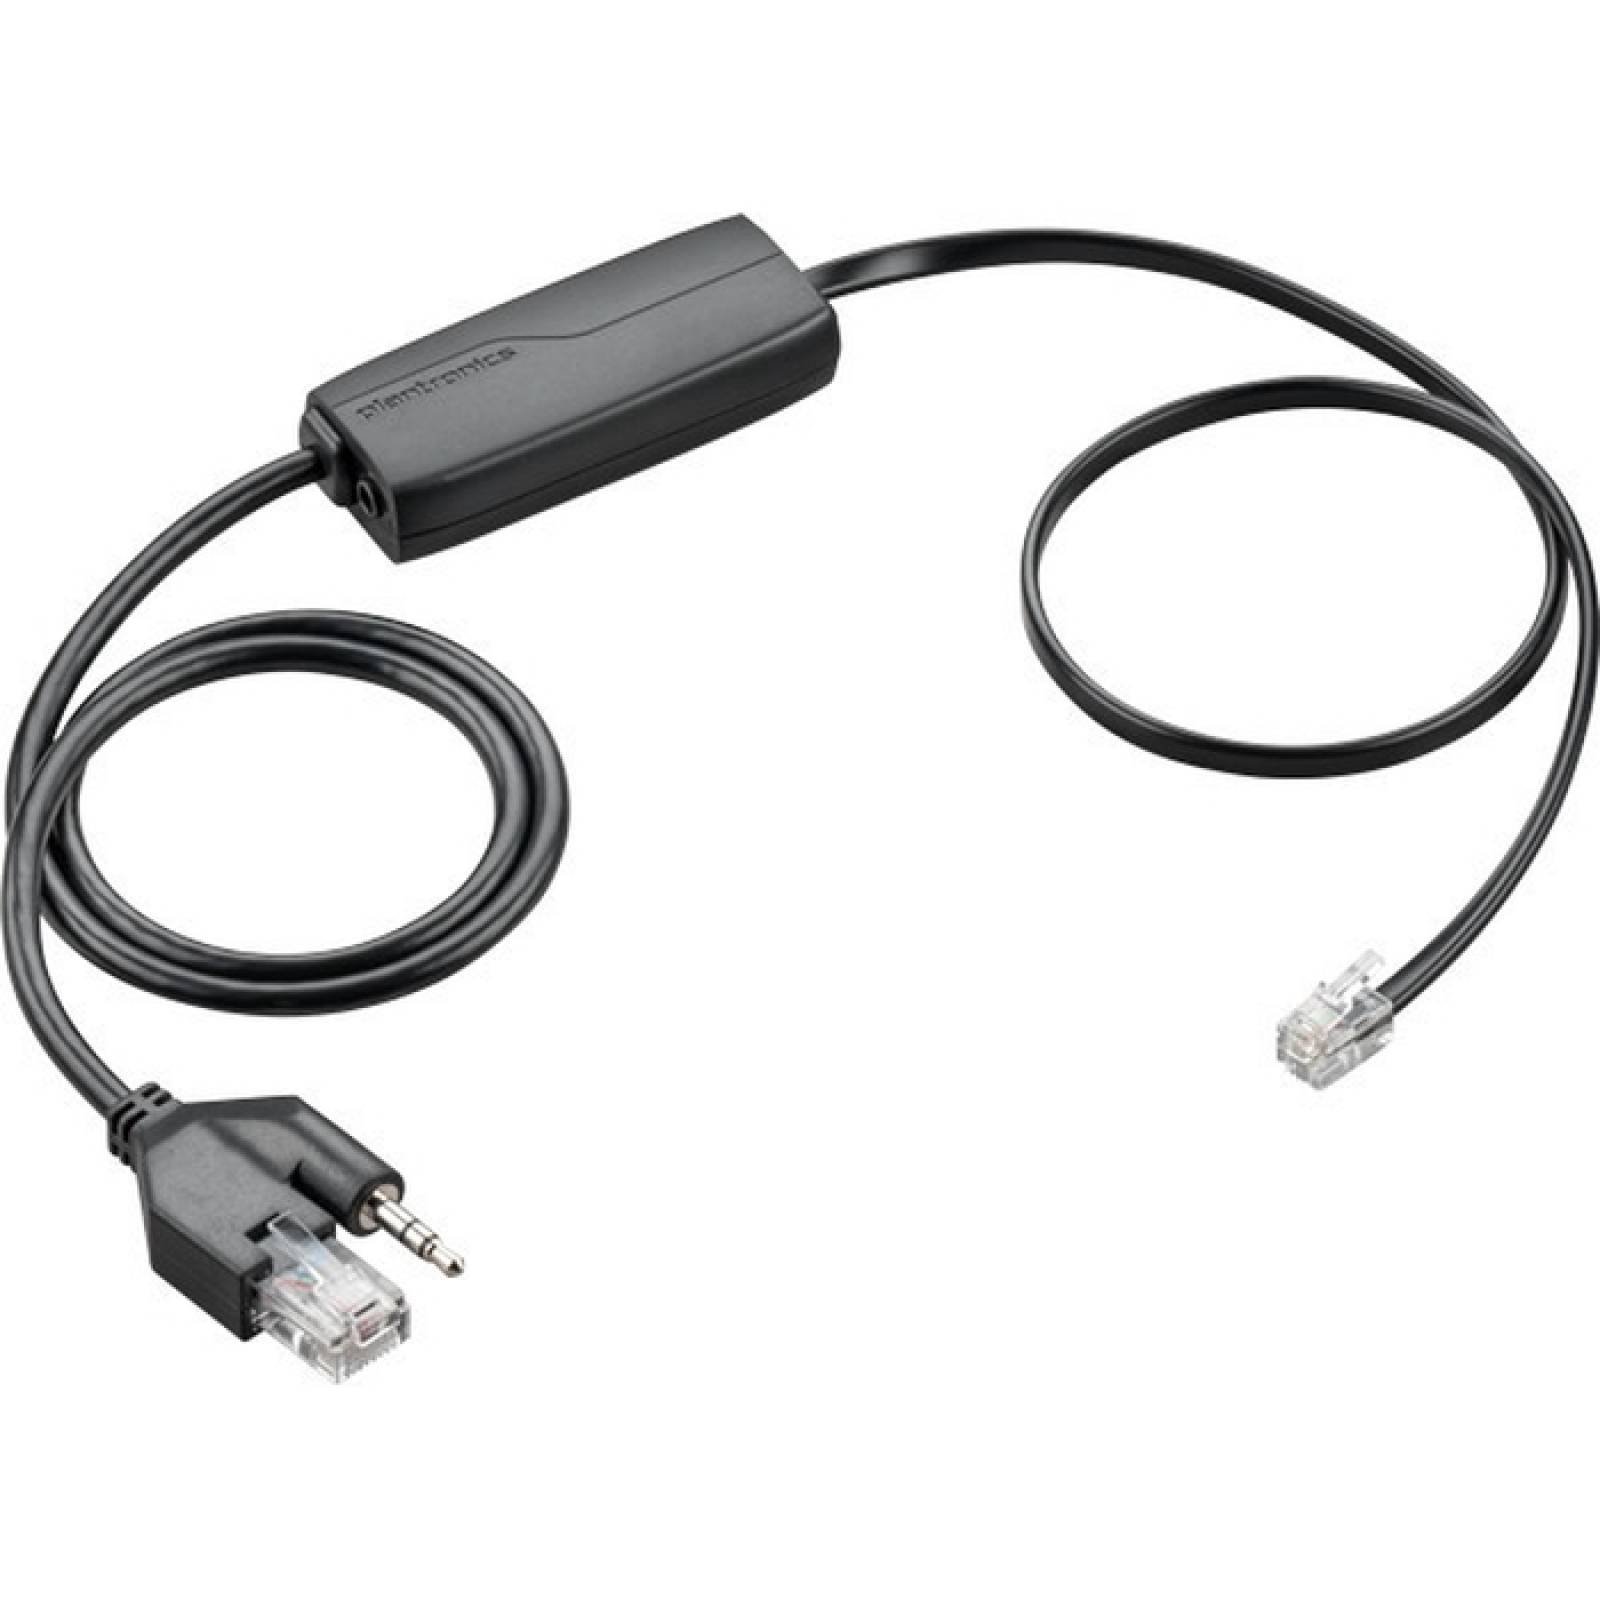 Cable adaptador APD80 de Plantronics